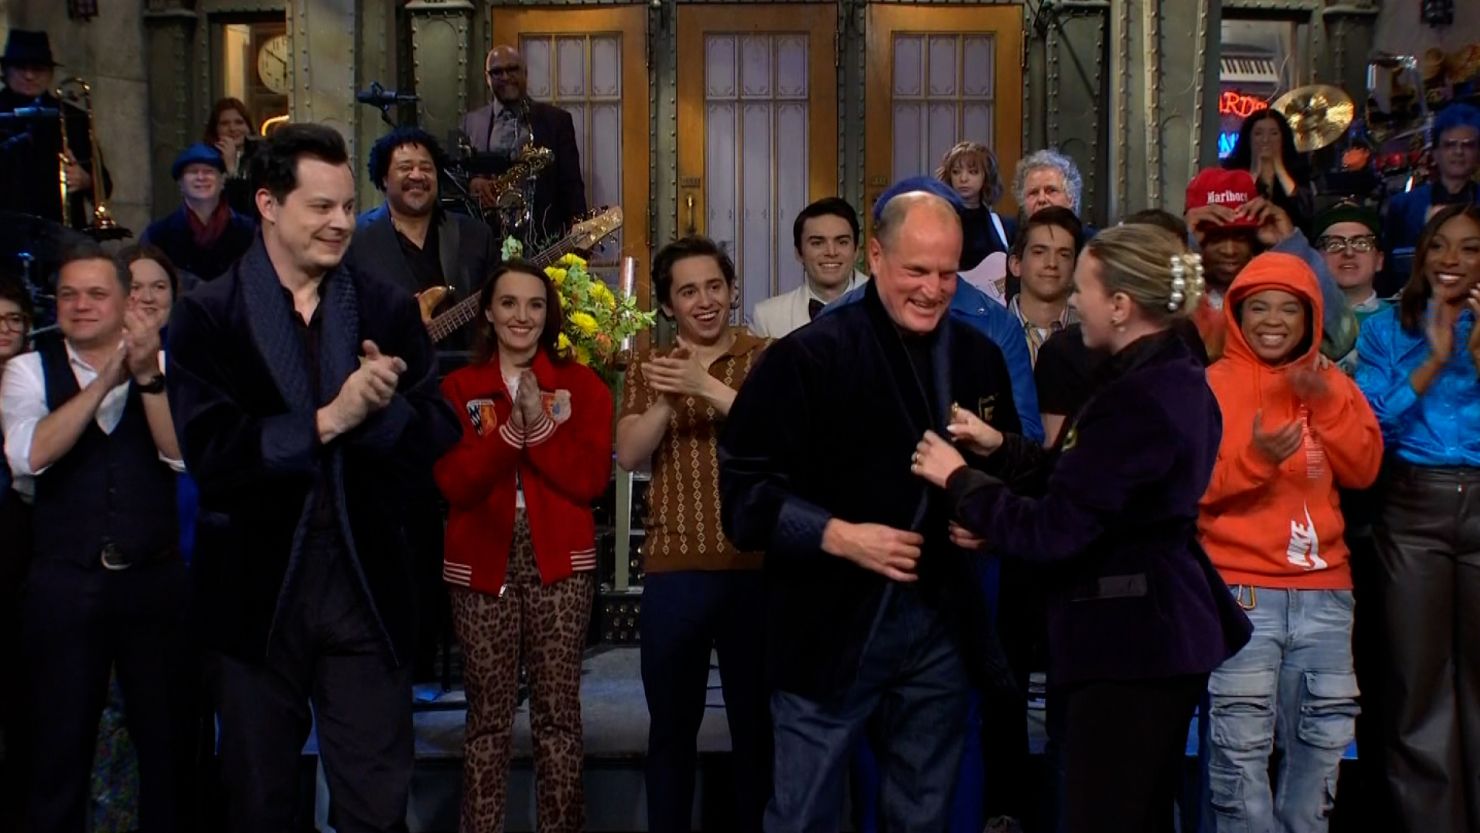 Woody Harrelson receives a "Saturday Night Live" honorary jacket from Scarlett Johansson.